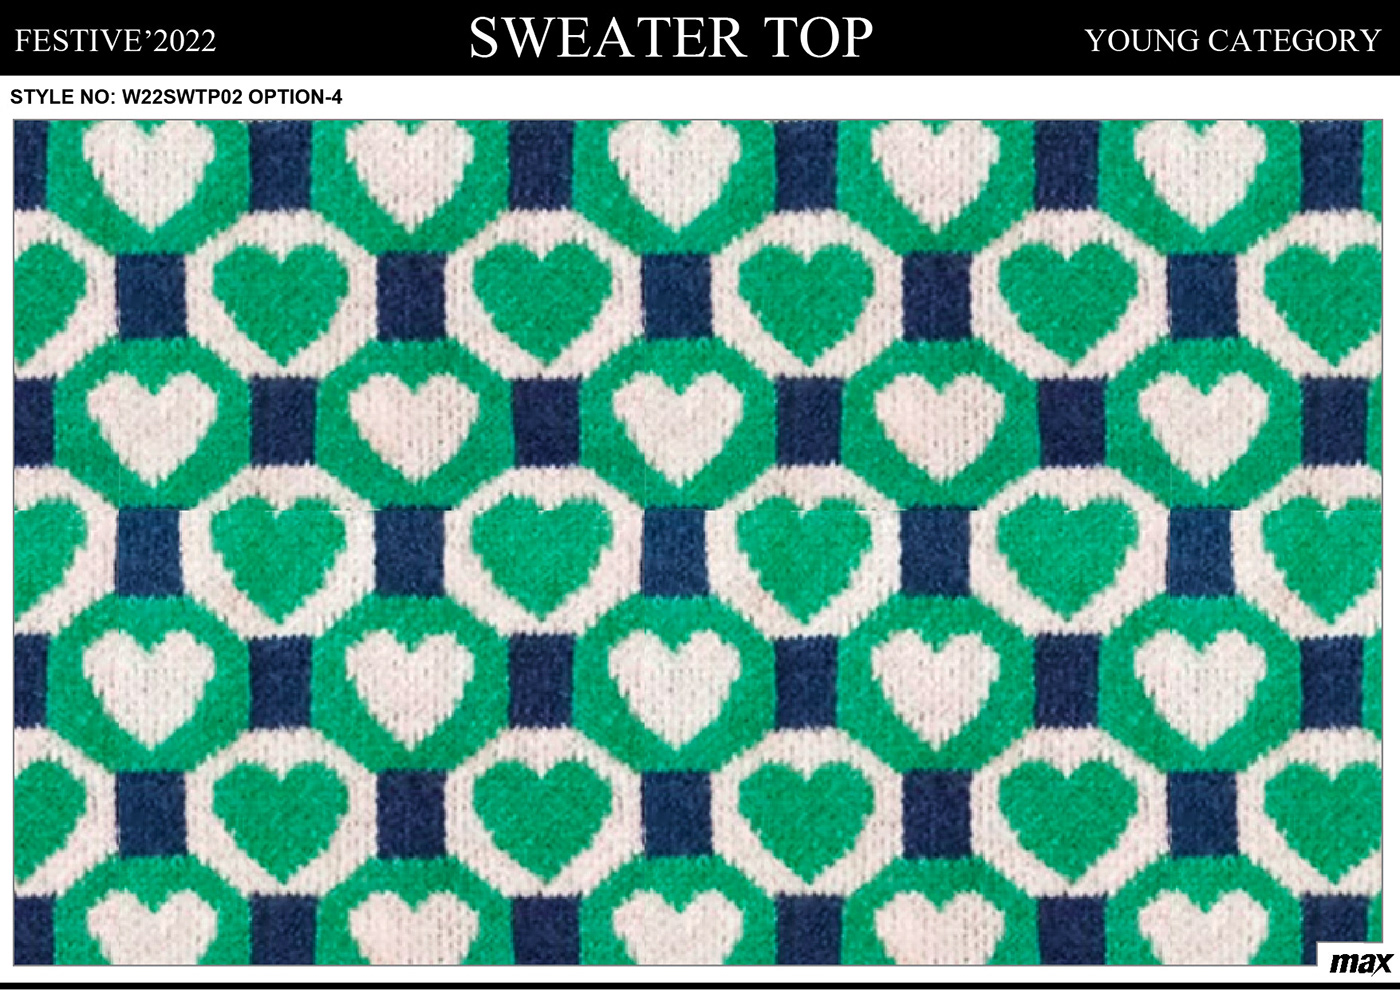 Techpacks Technical Design Illustrator fashion design womenswear portfolio designer knitwear Collection Sweaters